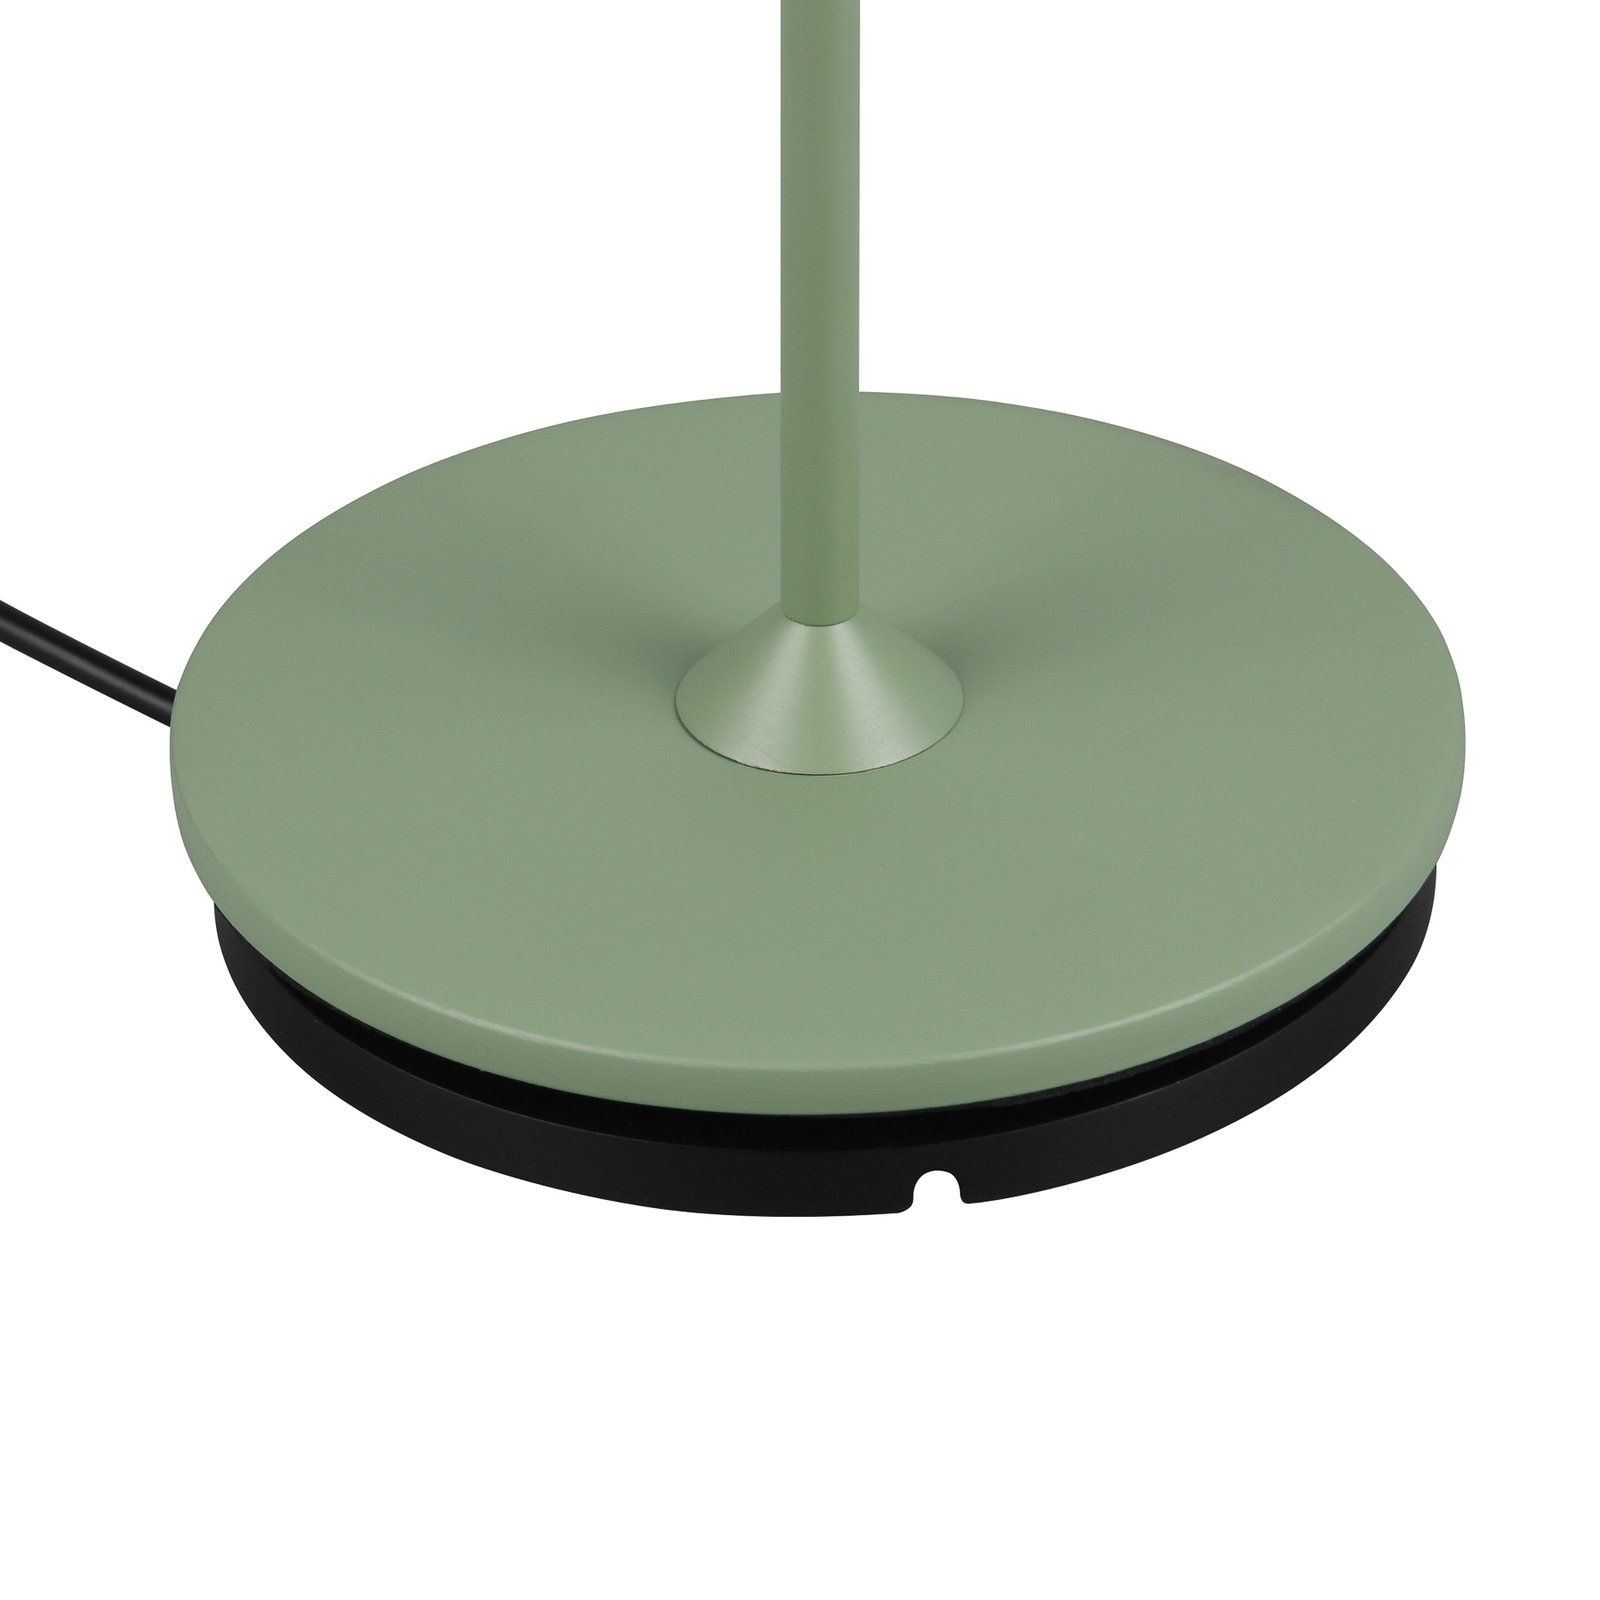 Suarez LED baterijska stolna lampa, zelena, visina 39 cm, metal